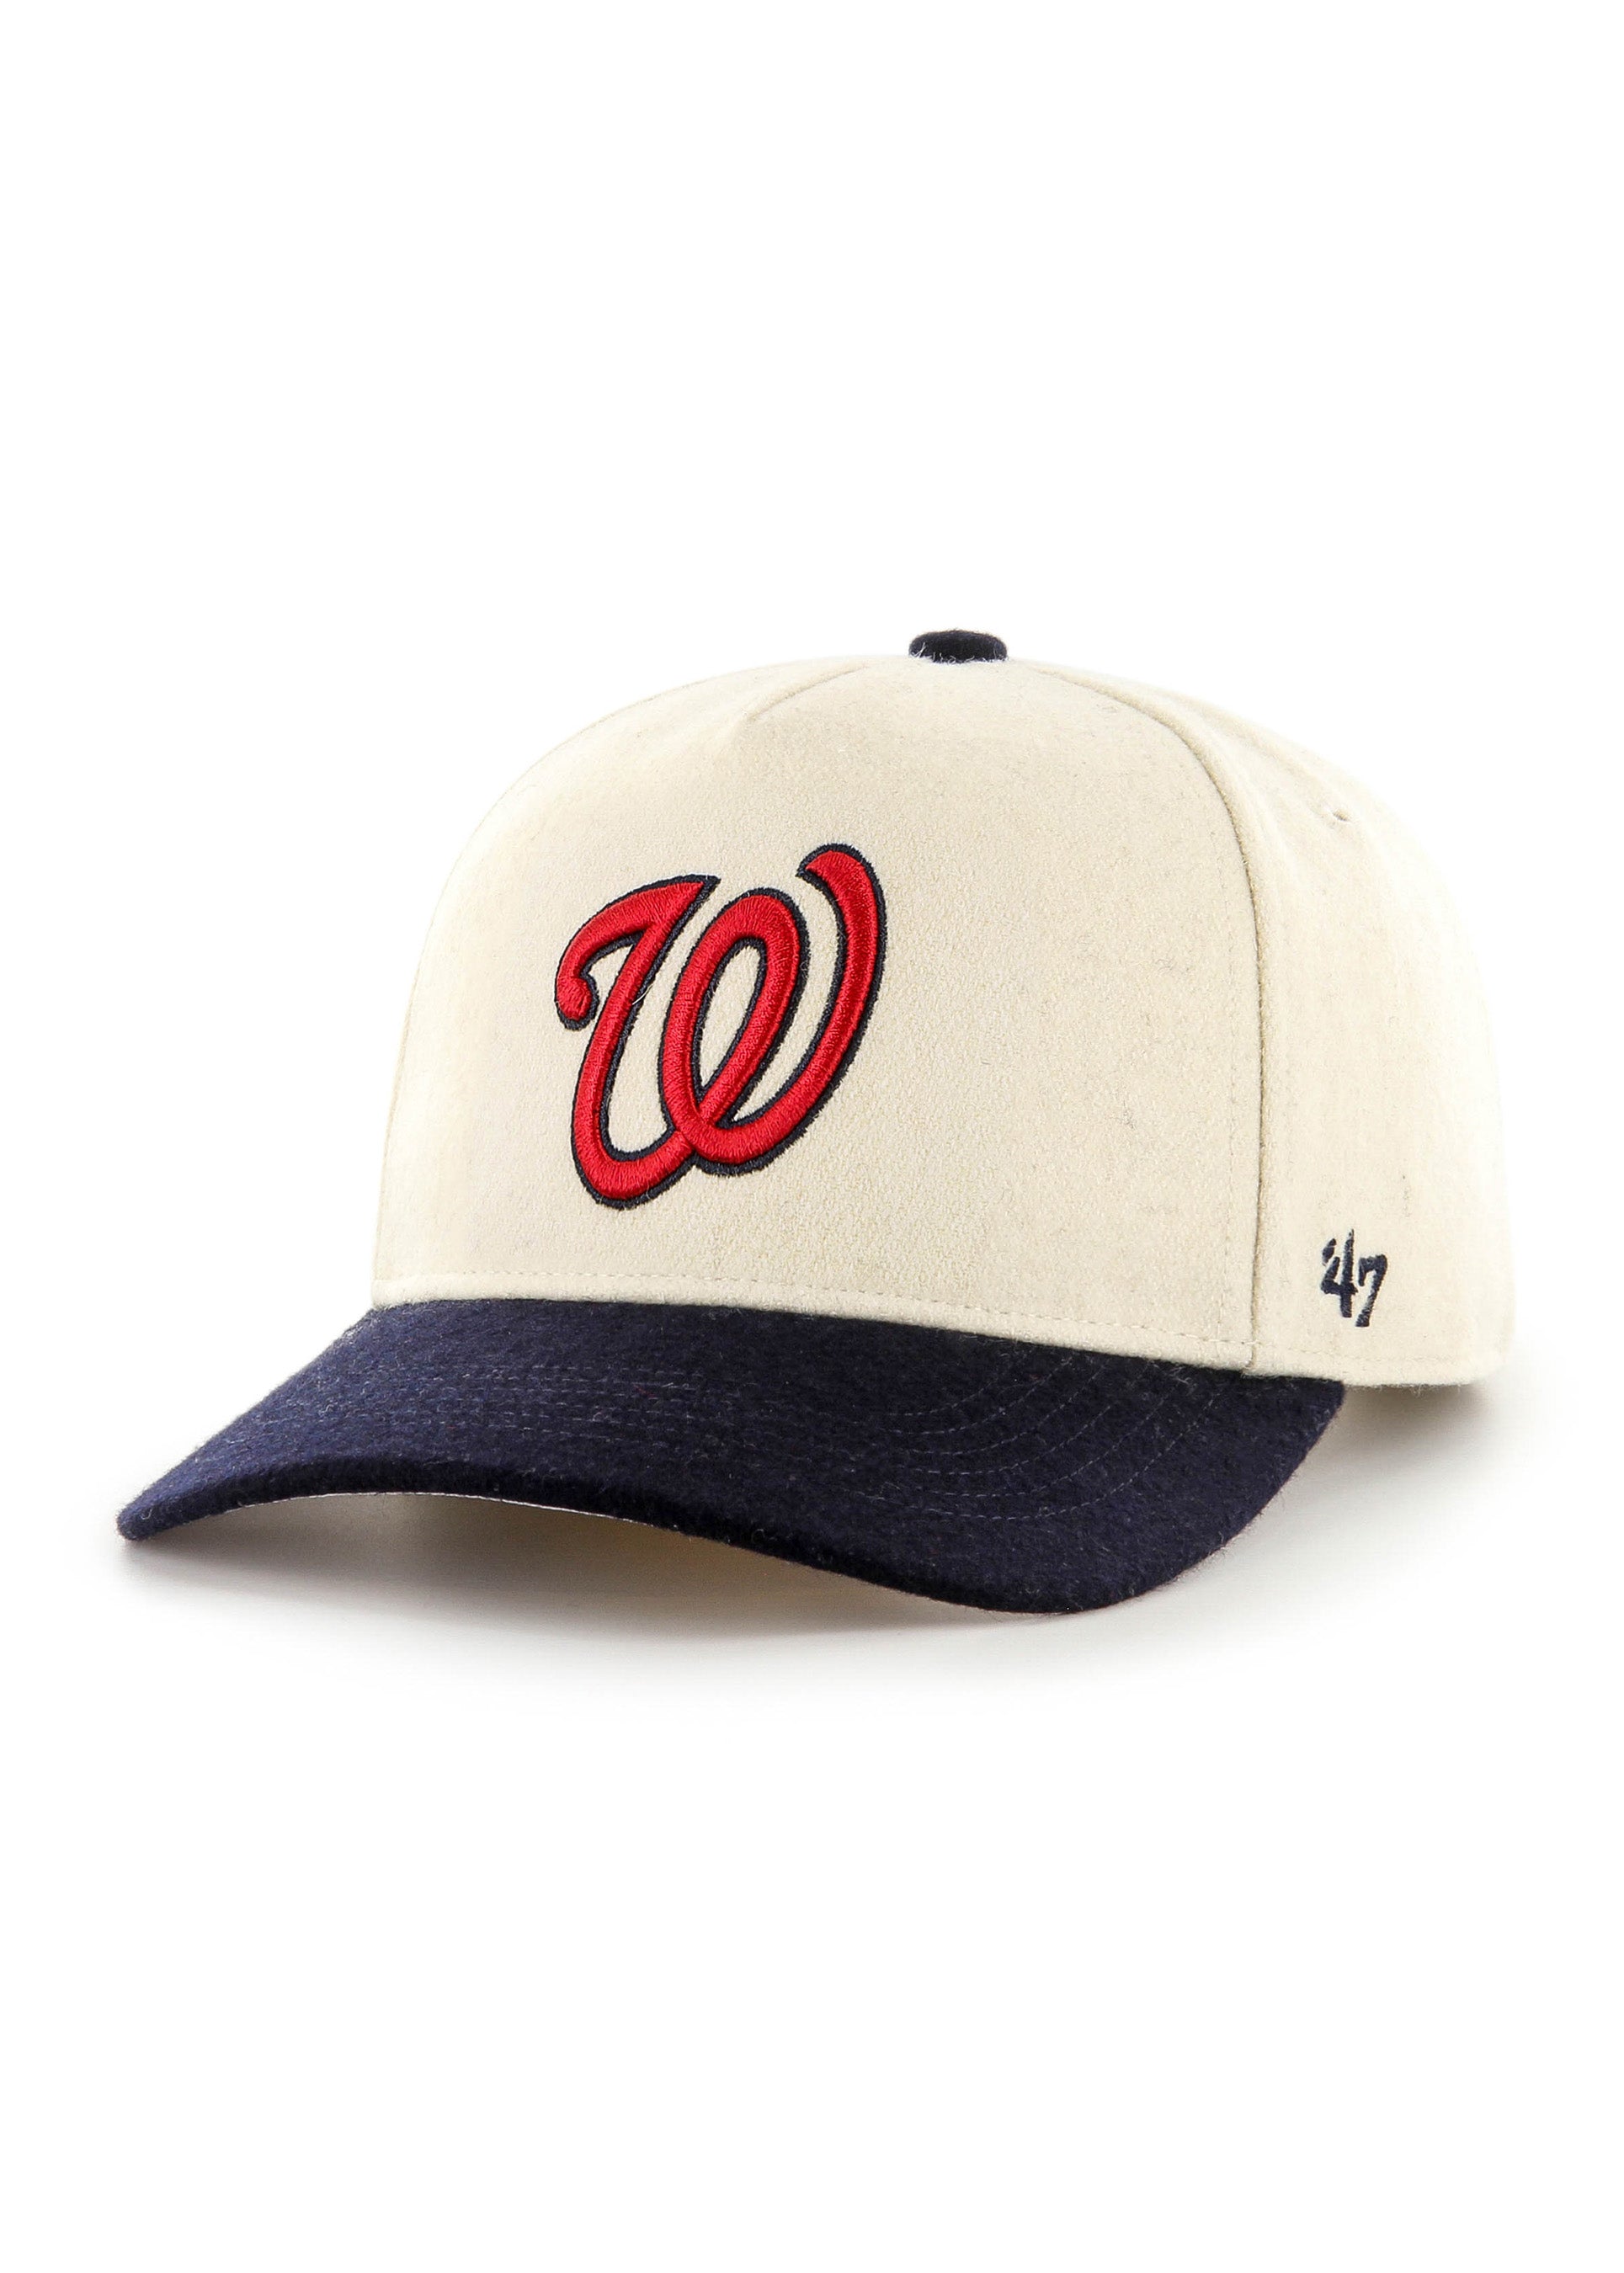 47 Red/Navy Washington Nationals Retro Super Hitch Snapback Hat